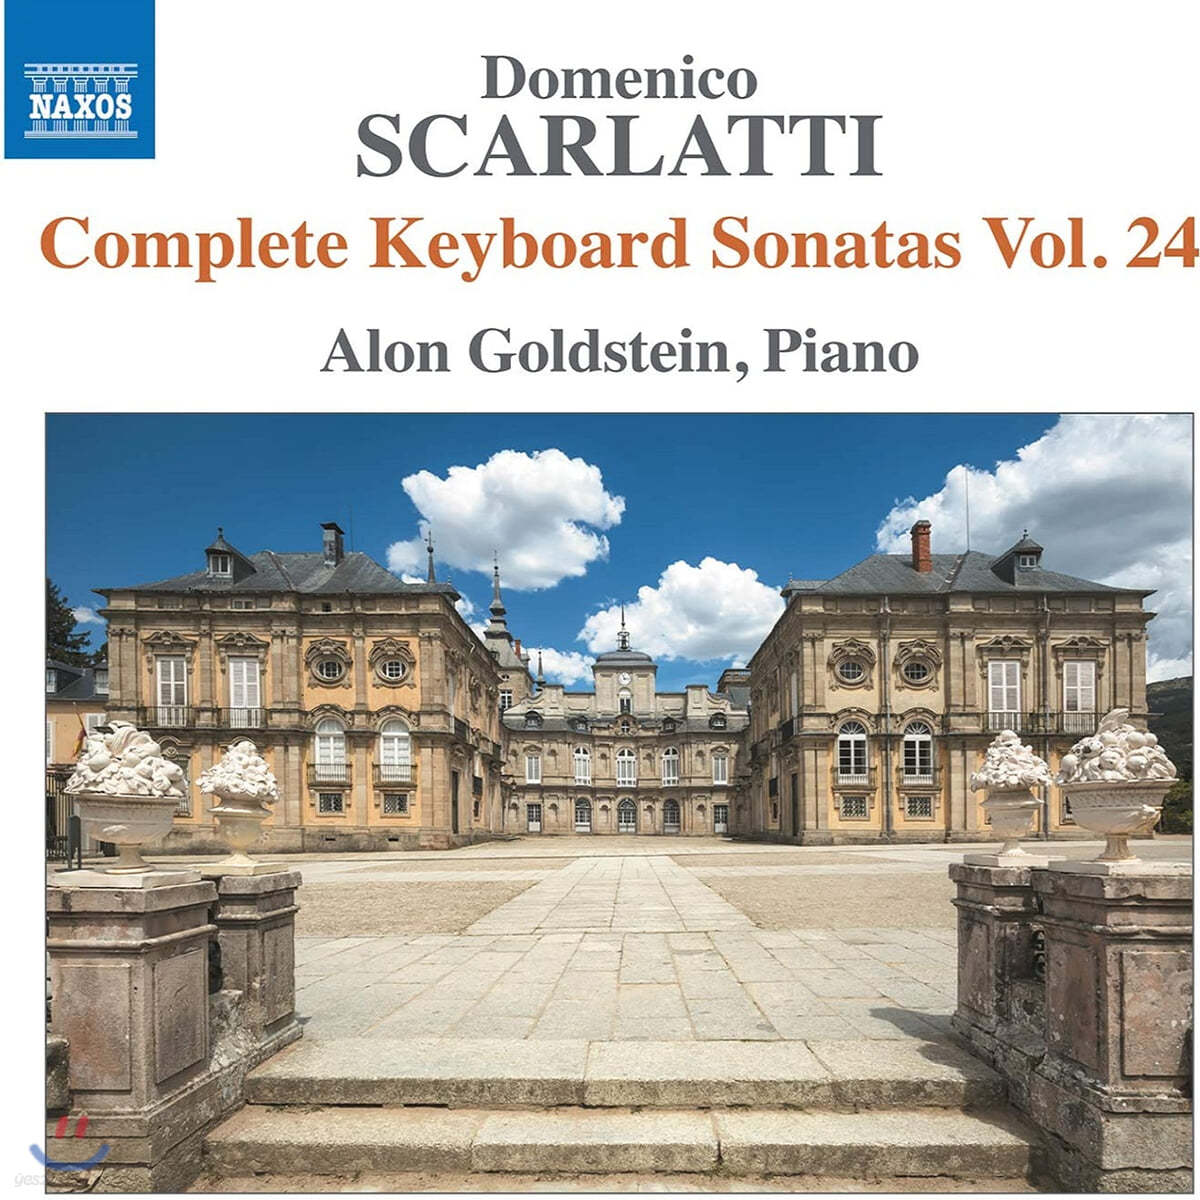 Alon Goldstein 스카를라티: 건반소나타 24집 (Scarlatti: Complete Keyboard Sonatas Vol. 24)